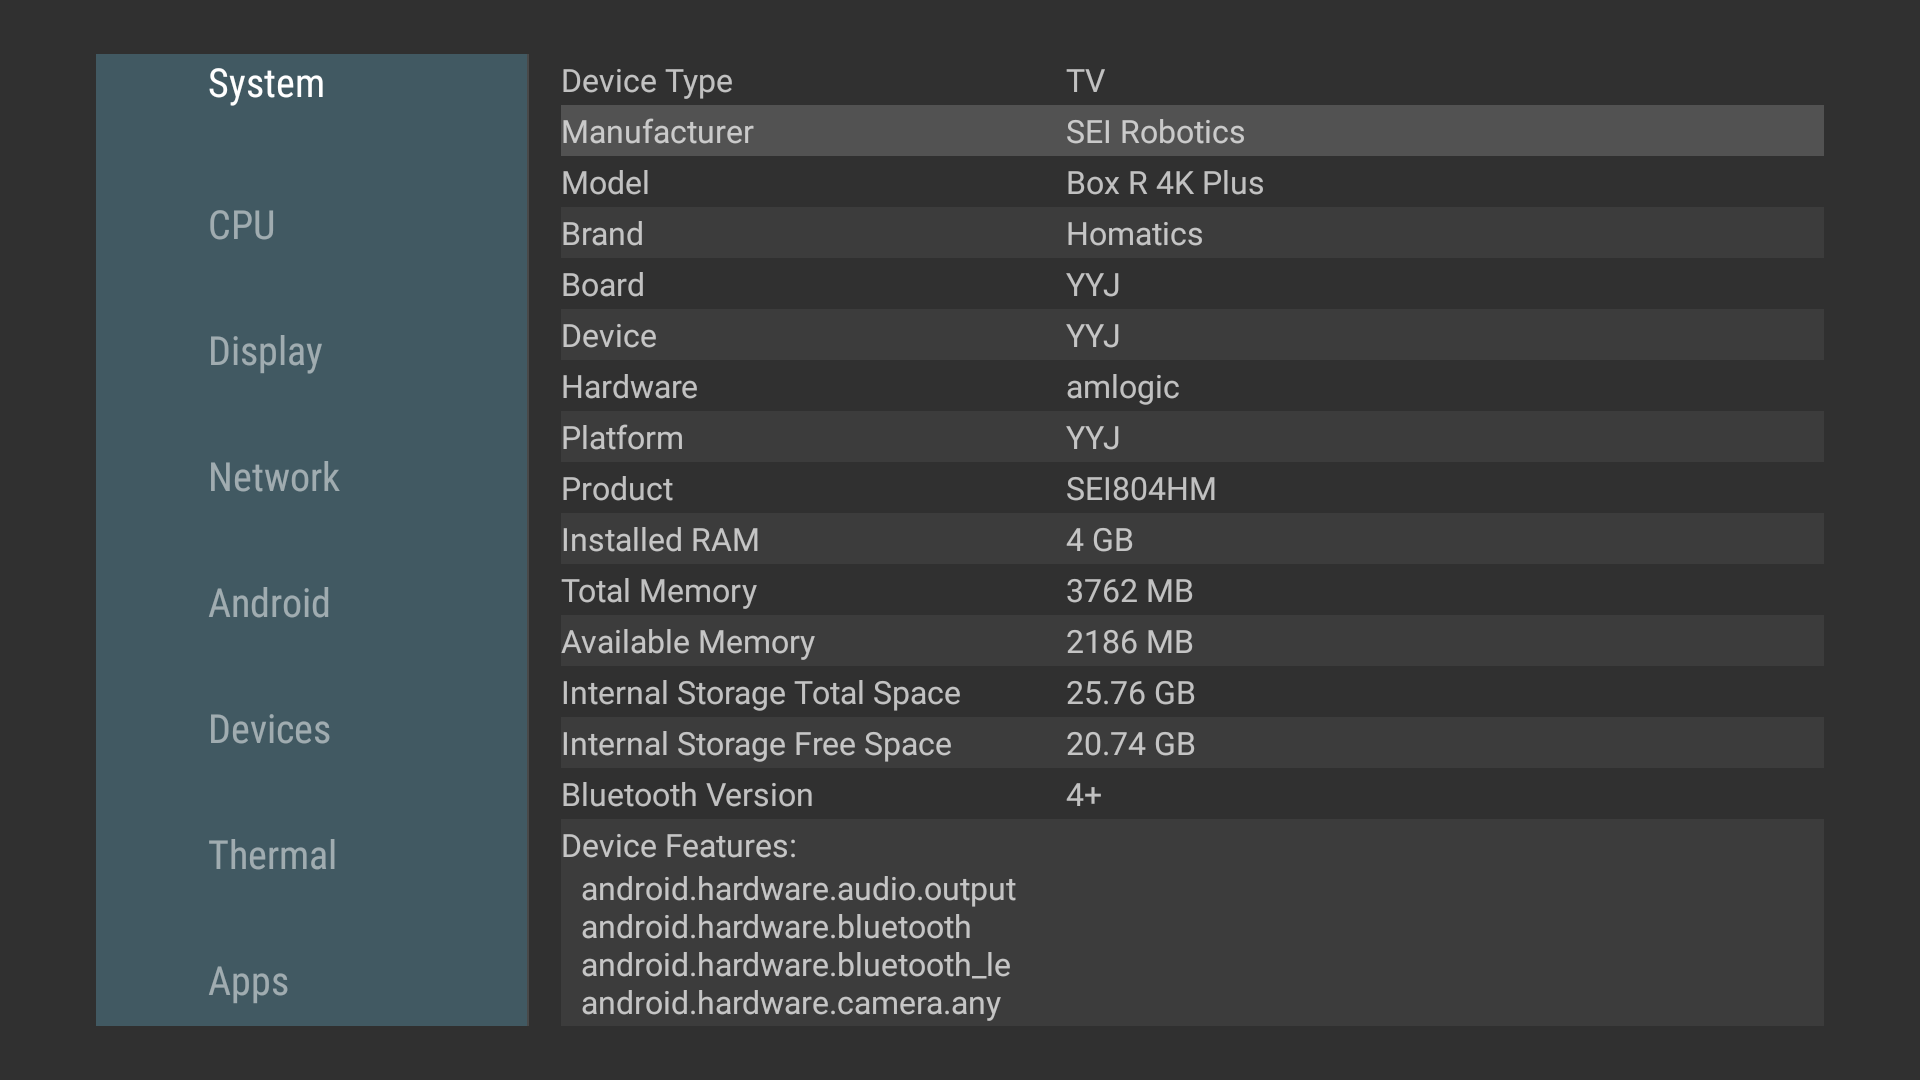 Homatics Box R 4K Plus - Android TV Guide